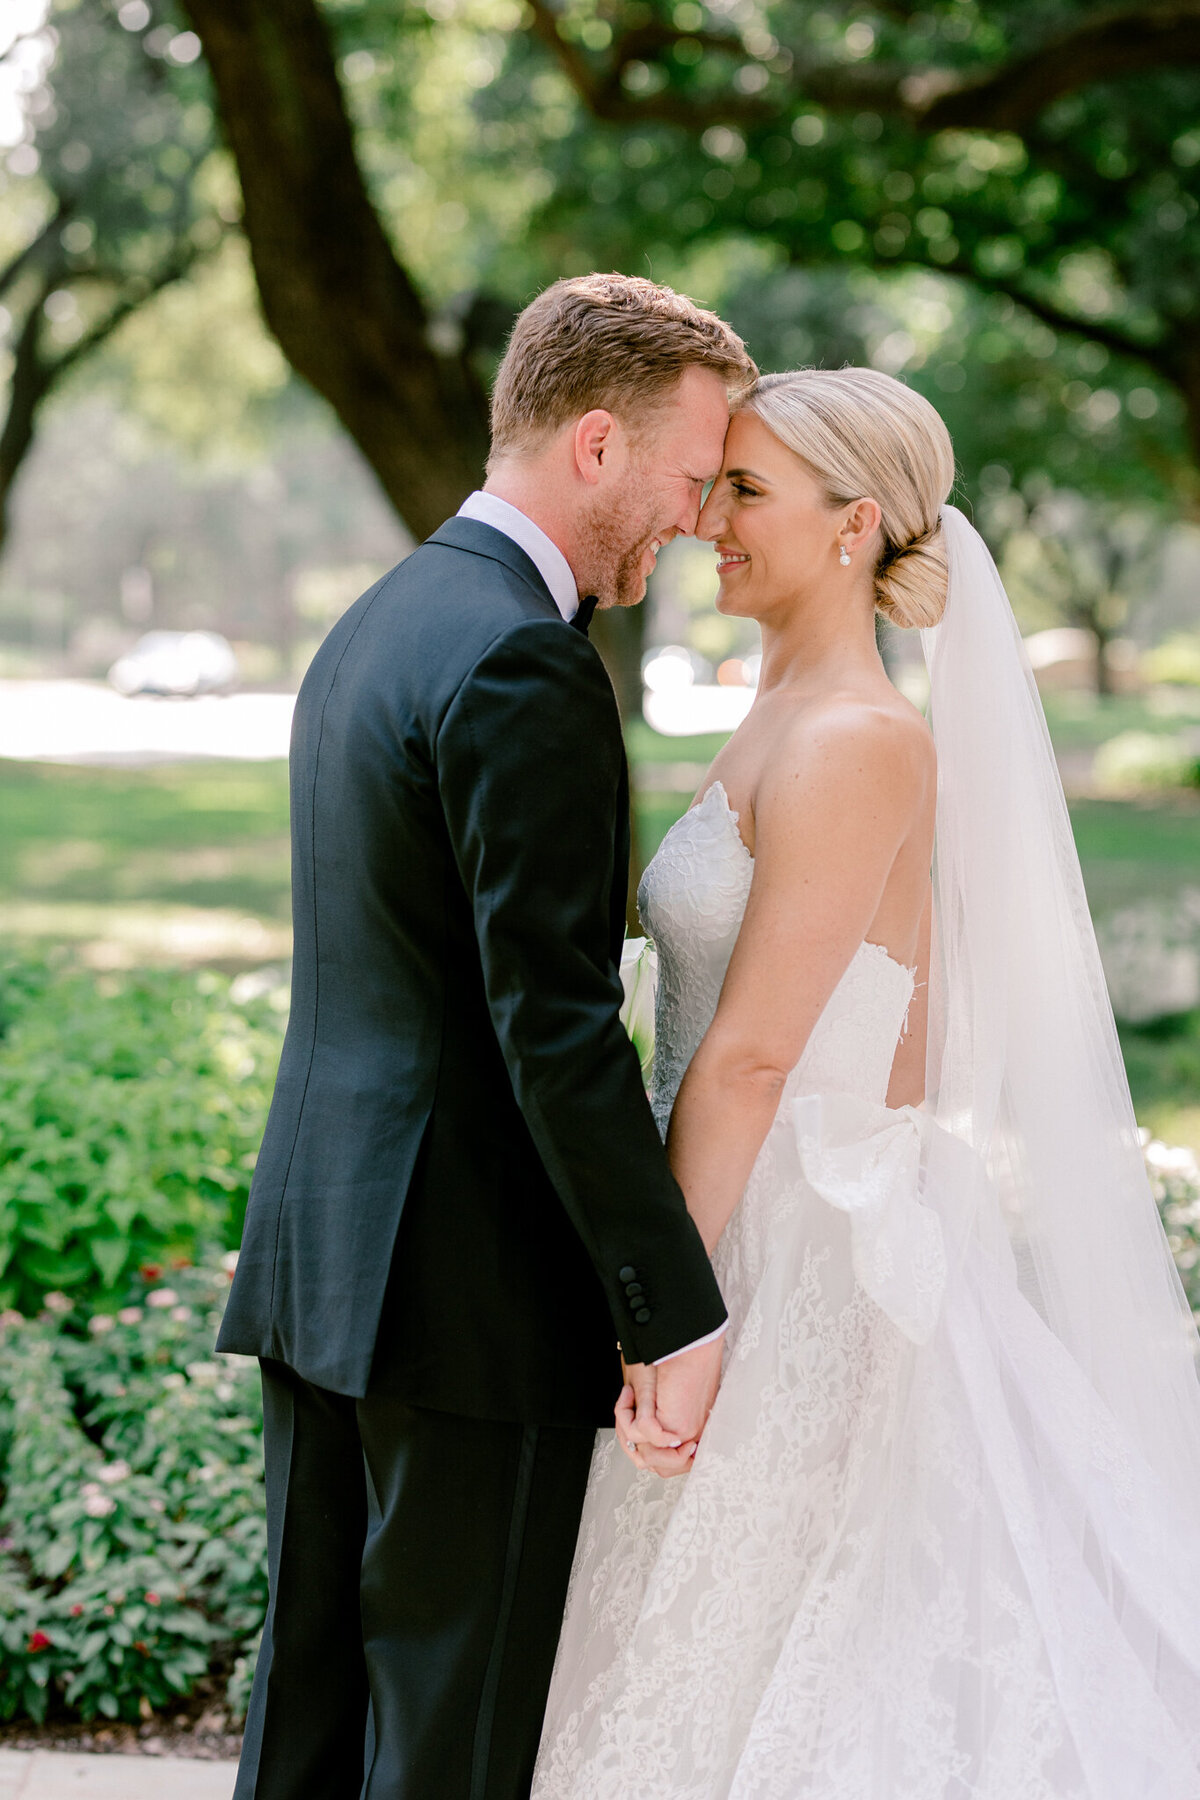 Katelyn & Kyle's Wedding at the Adolphus Hotel | Dallas Wedding Photographer | Sami Kathryn Photography-204